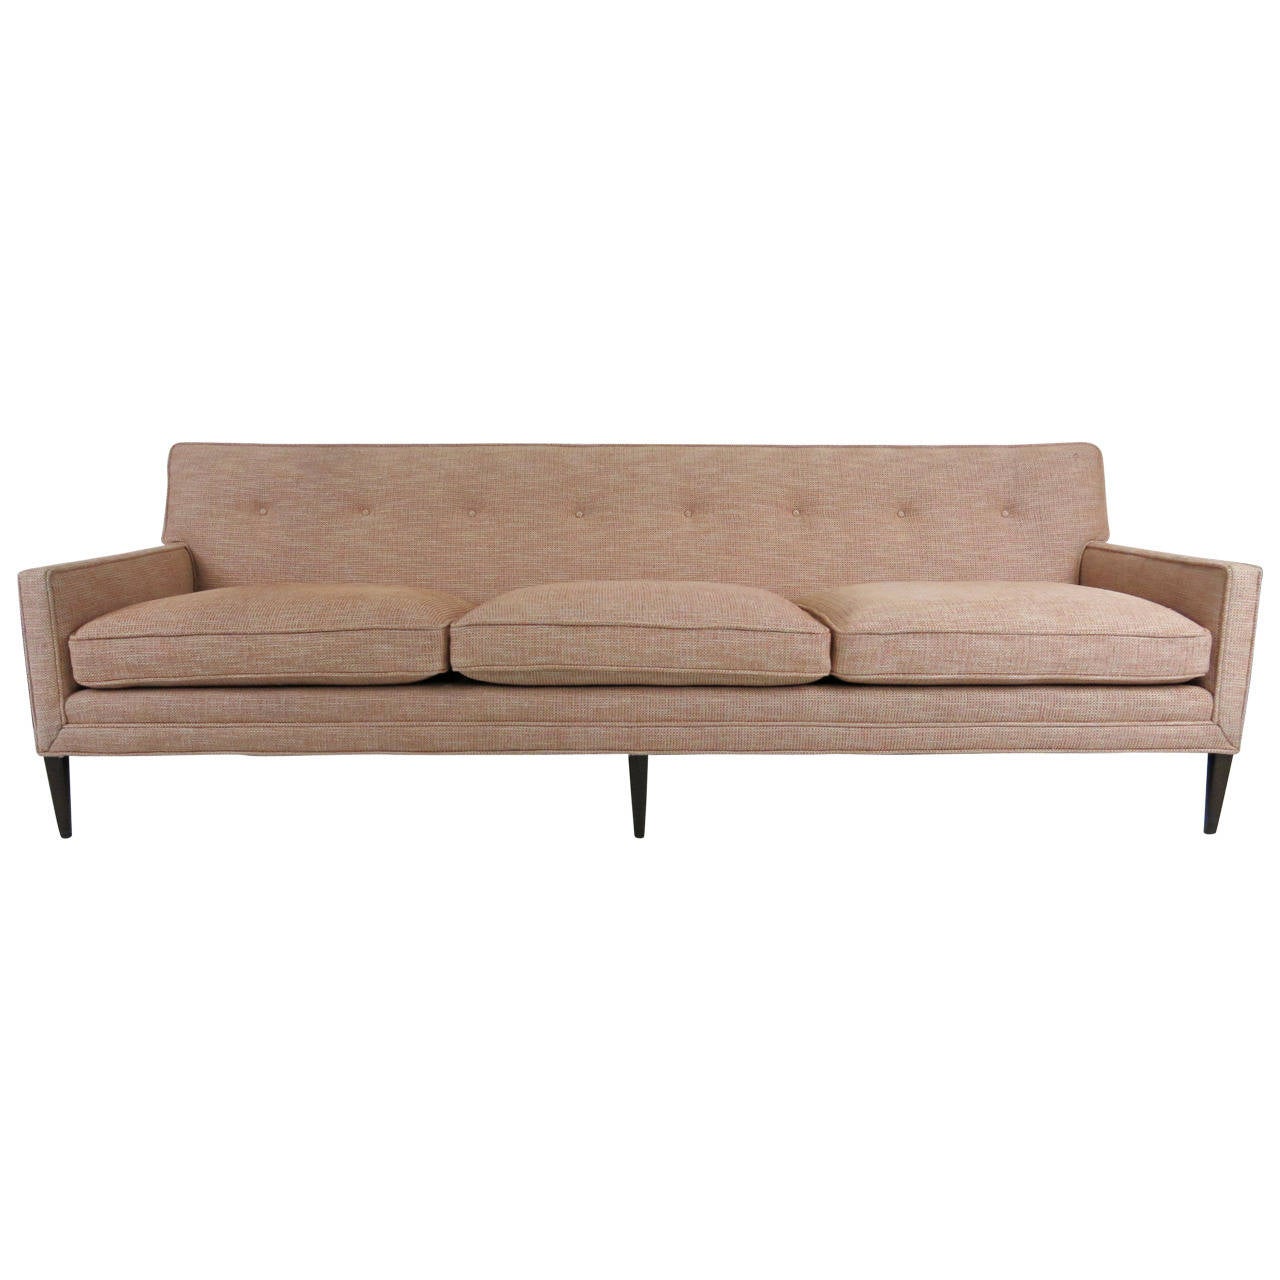 Exquisite Walnut Framed Modern Sofa For Sale at 1stdibs